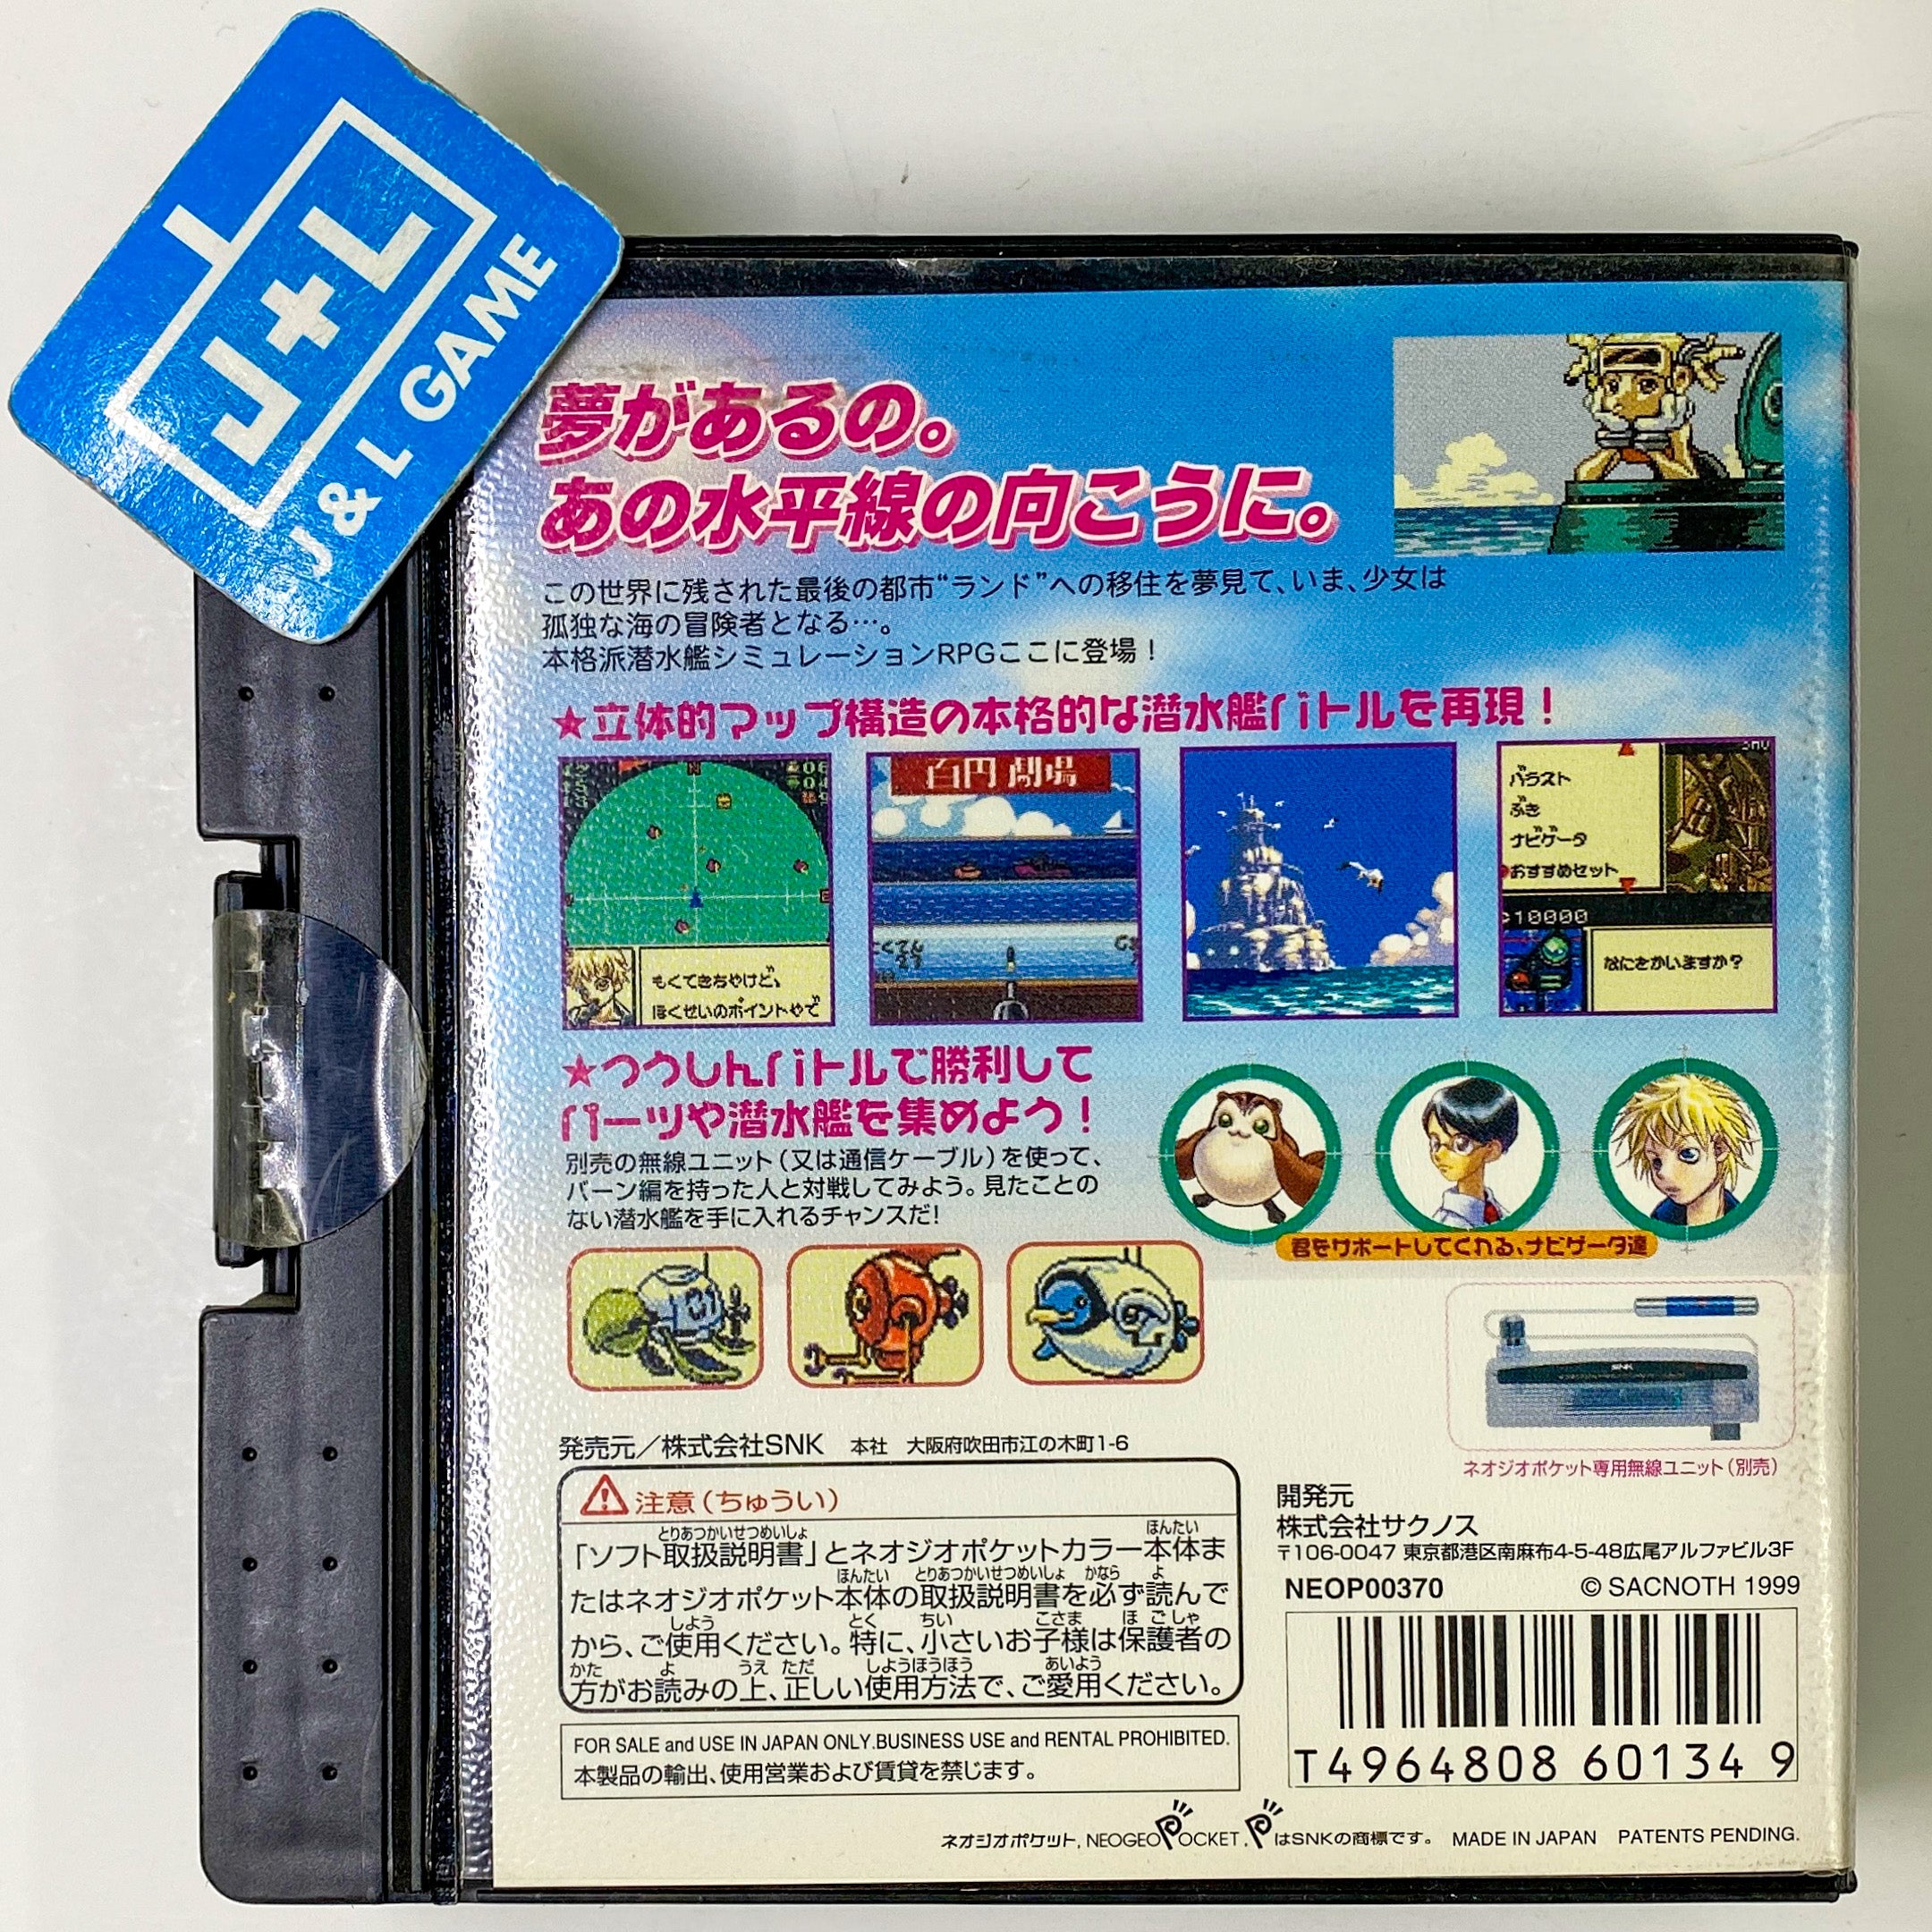 Dive Alert: Rebecca Hen - SNK NeoGeo Pocket Color (Japanese Import) Video Games SNK   